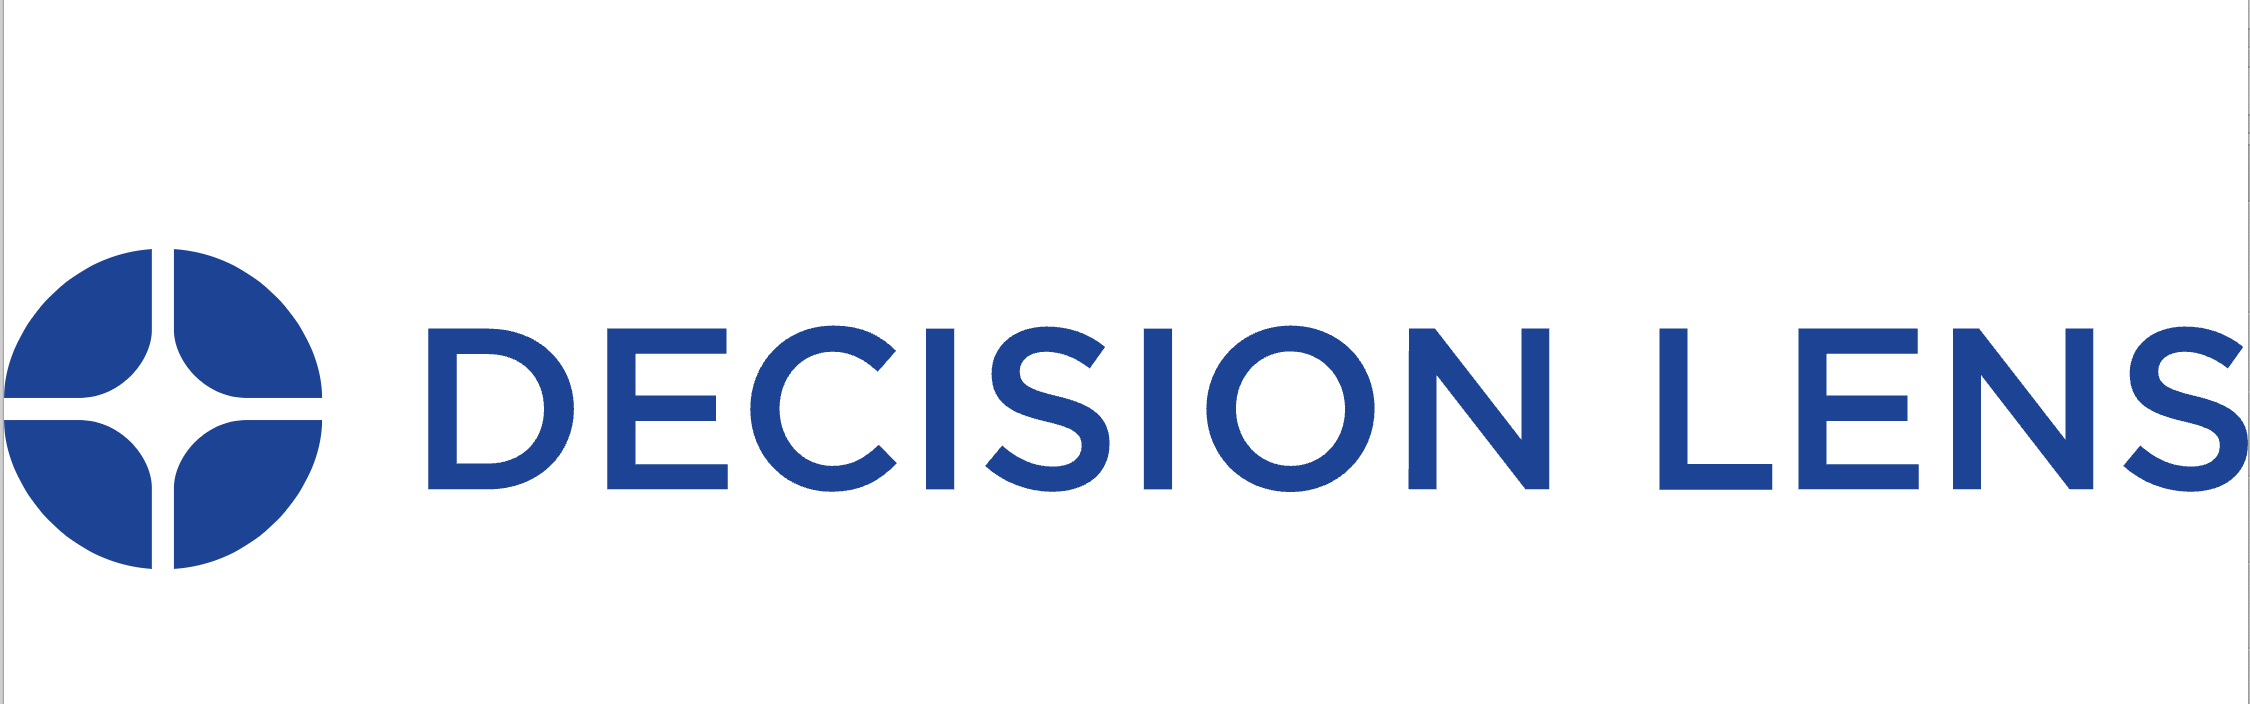 Decision Lens's logo